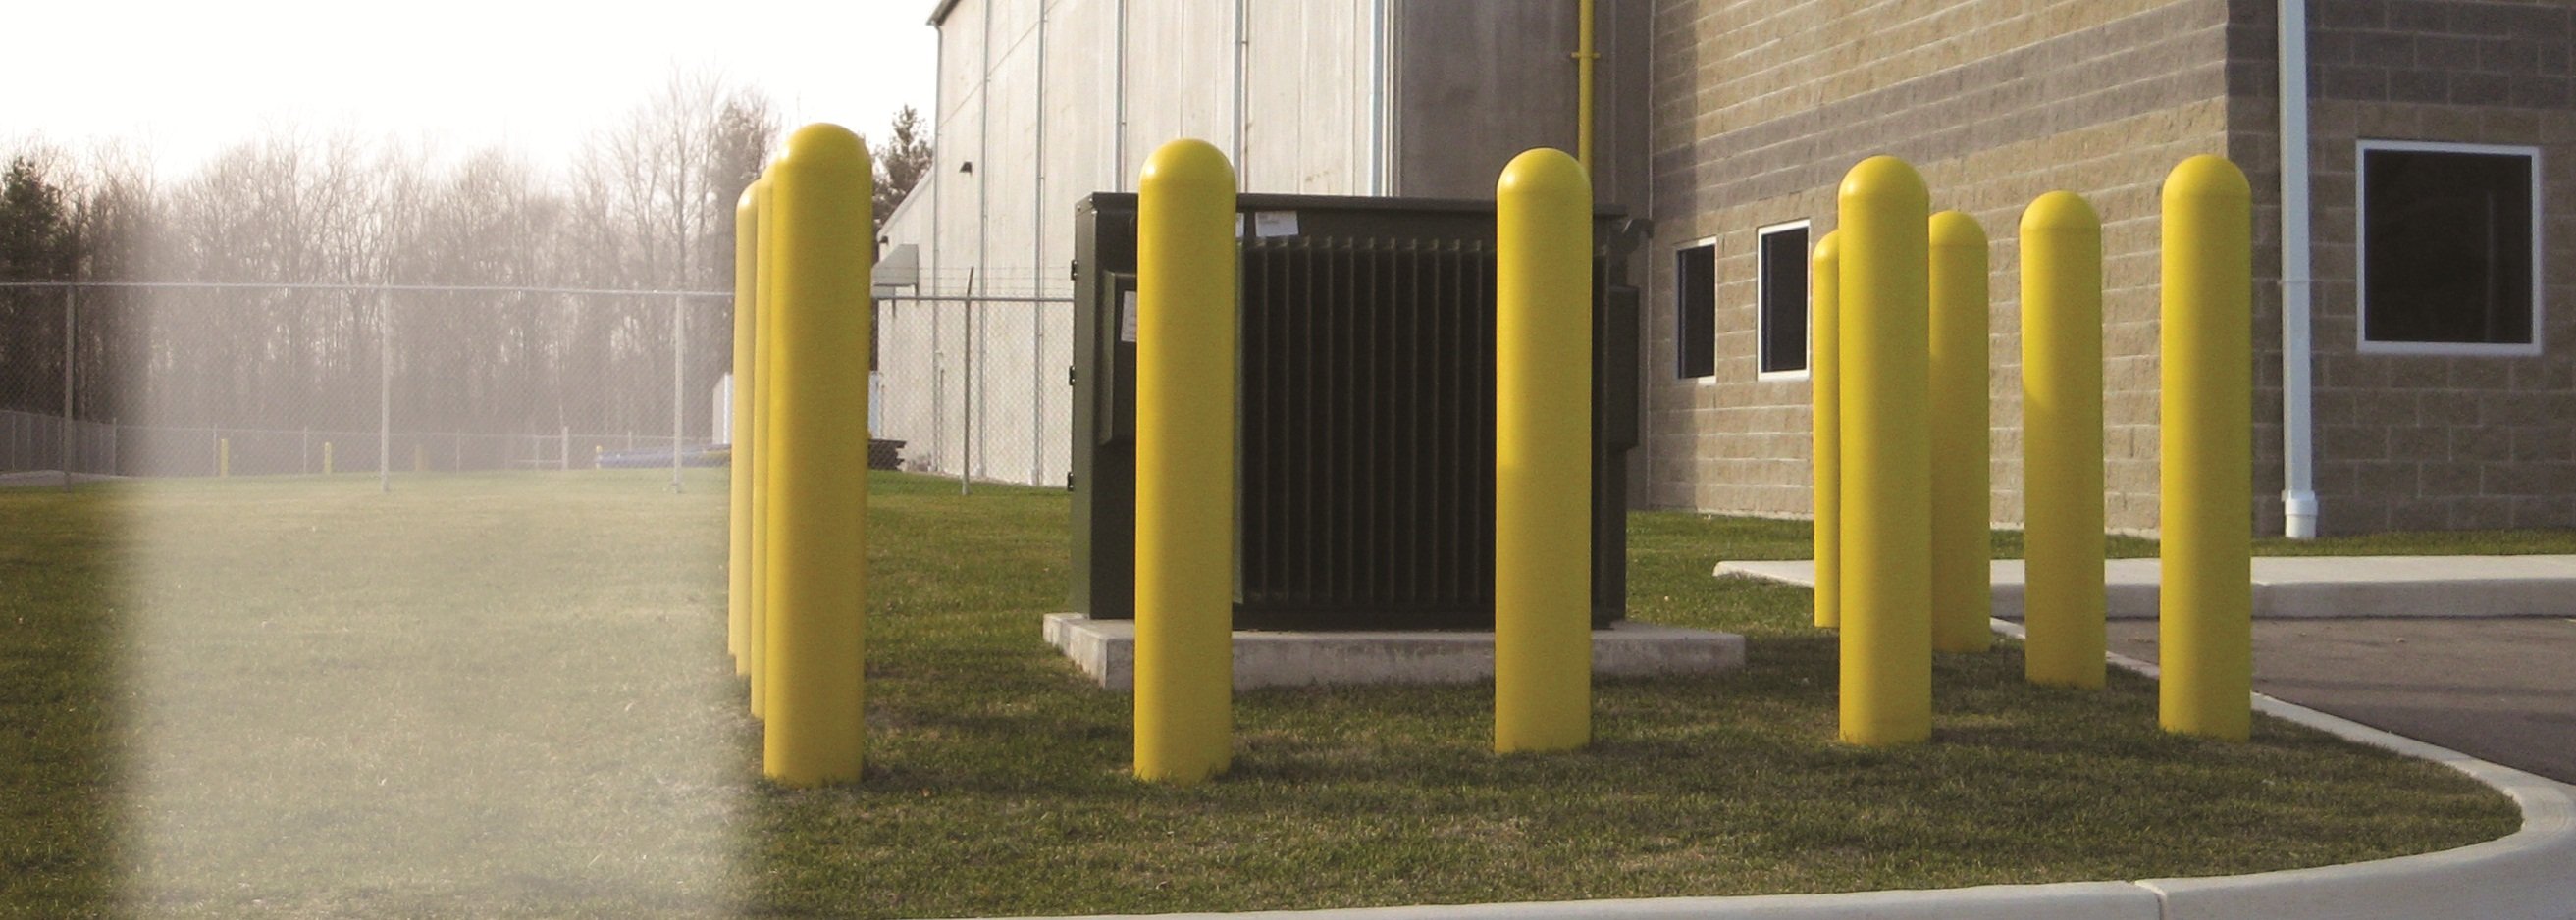 Yellow Precast Concrete Safety Bollards Surrounding Hydro Box